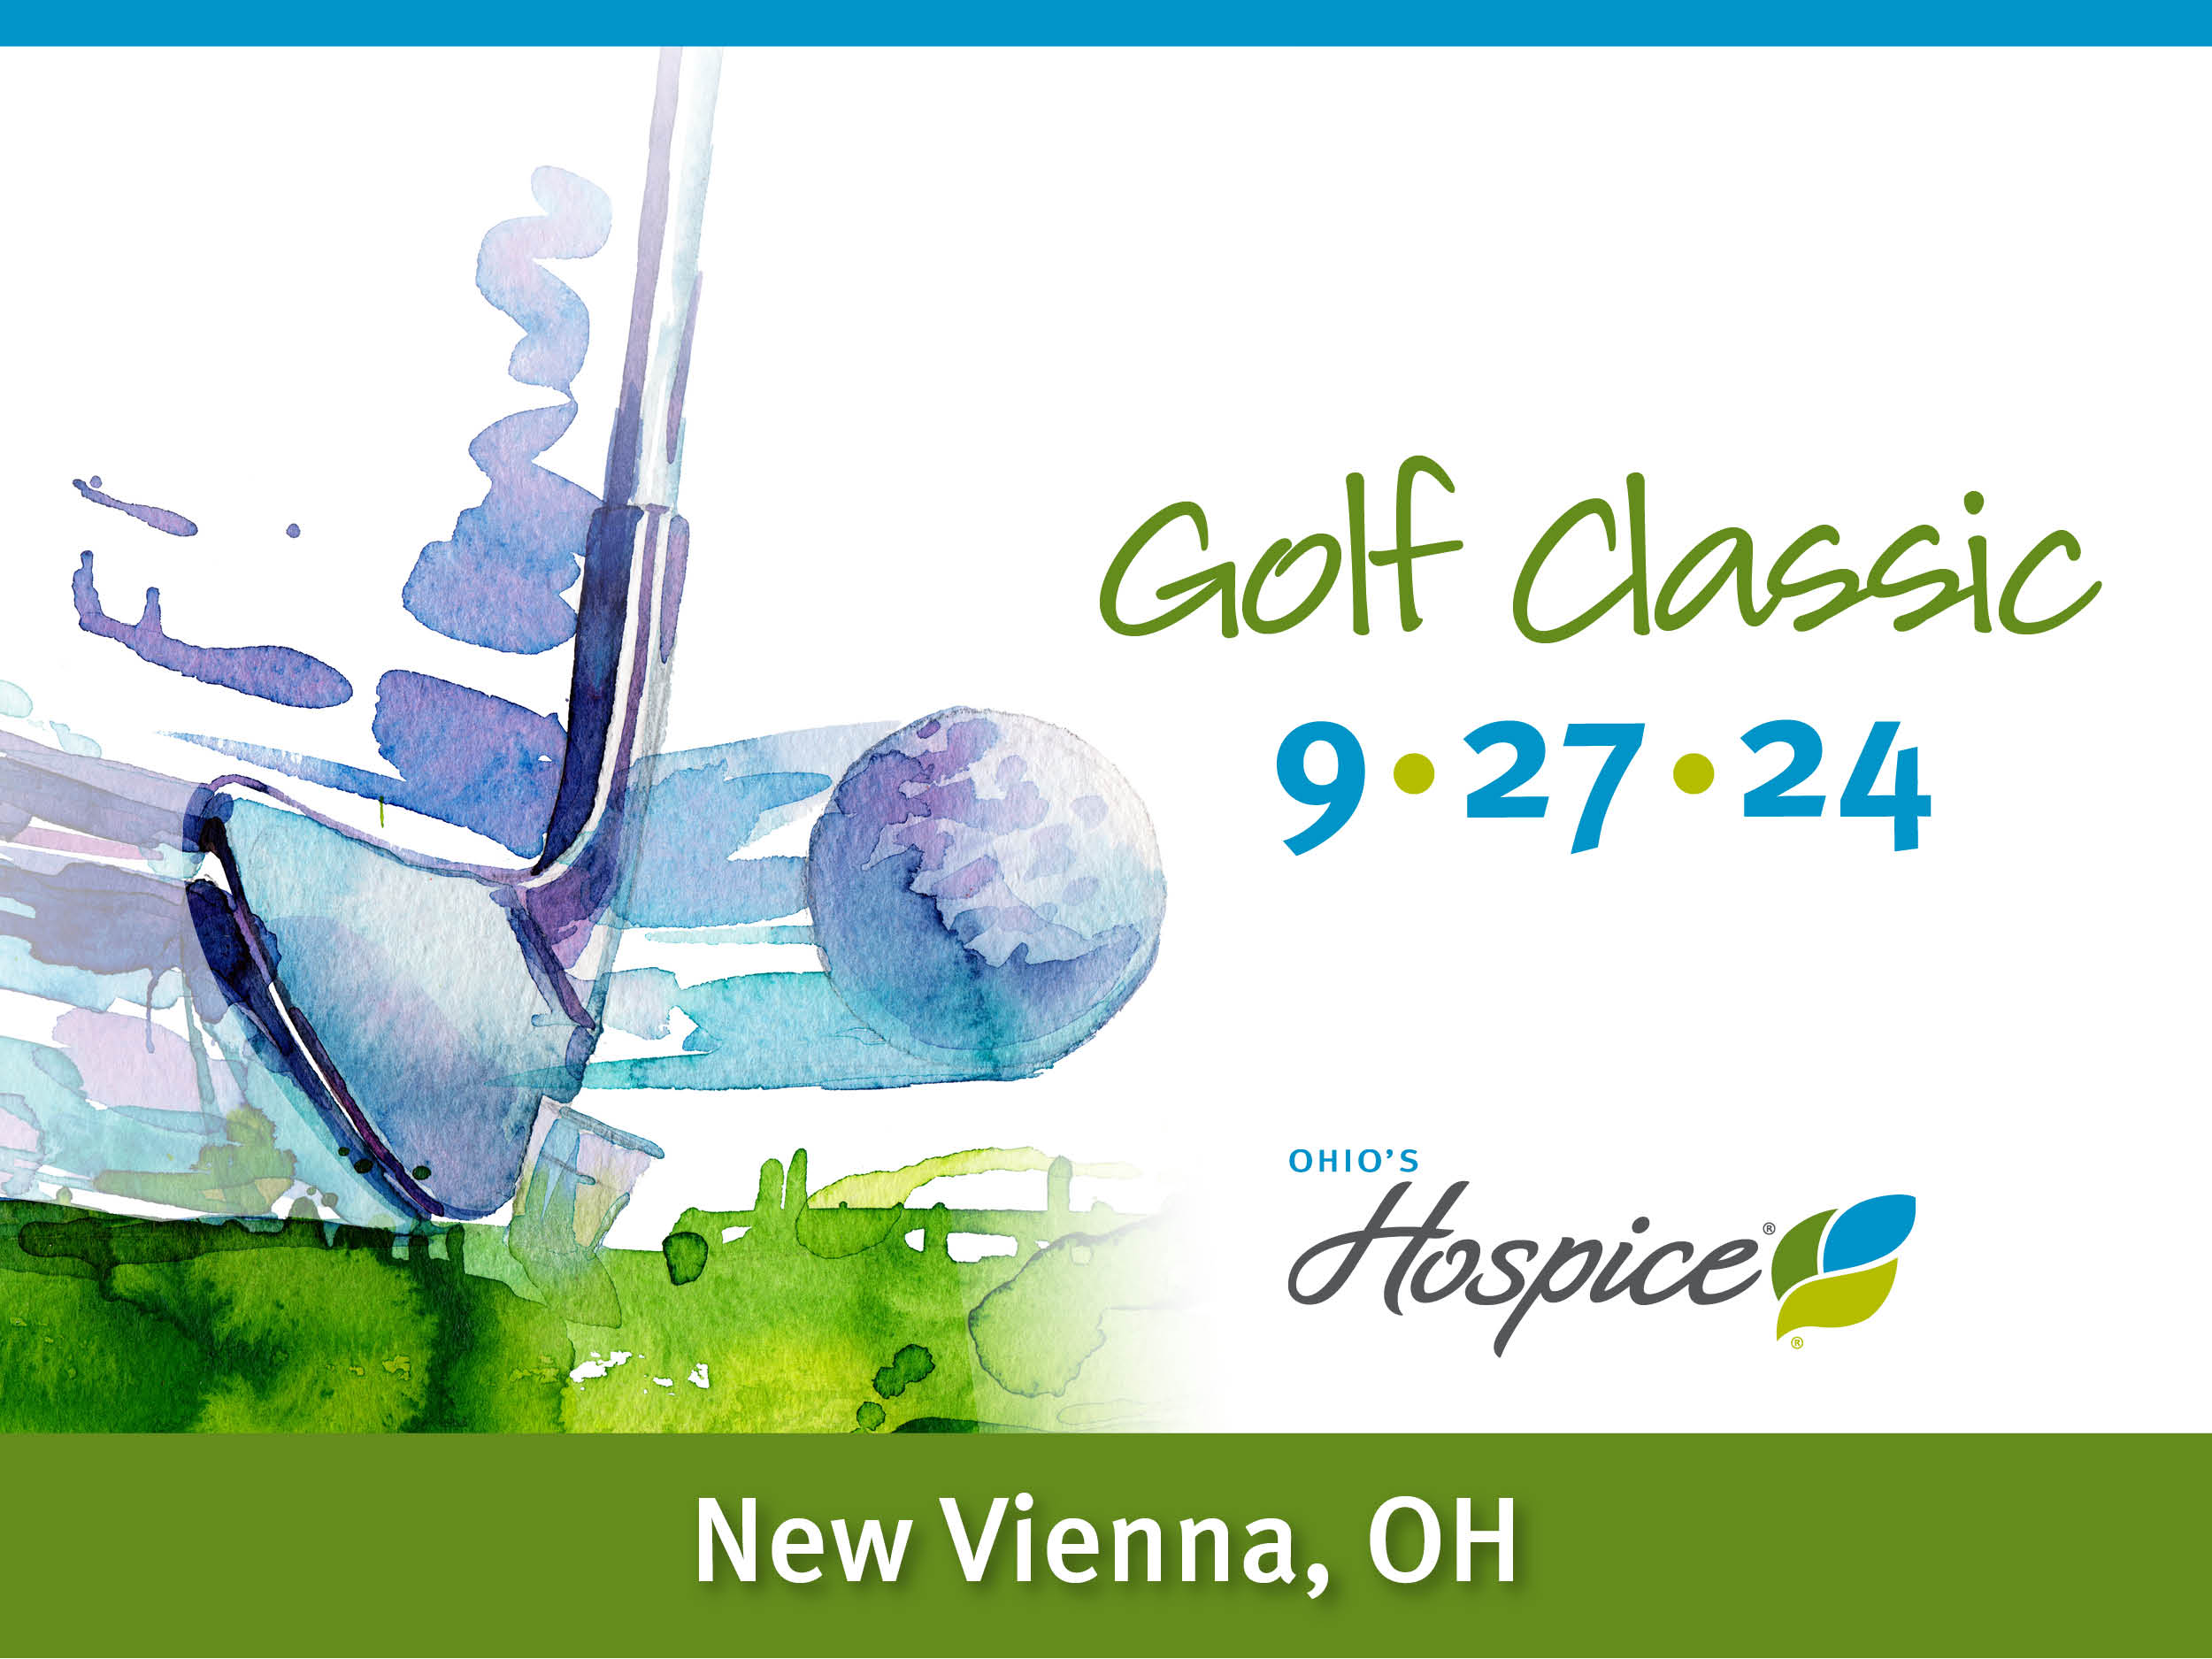 Golf Classic 9/27/24 New Vienna, OH